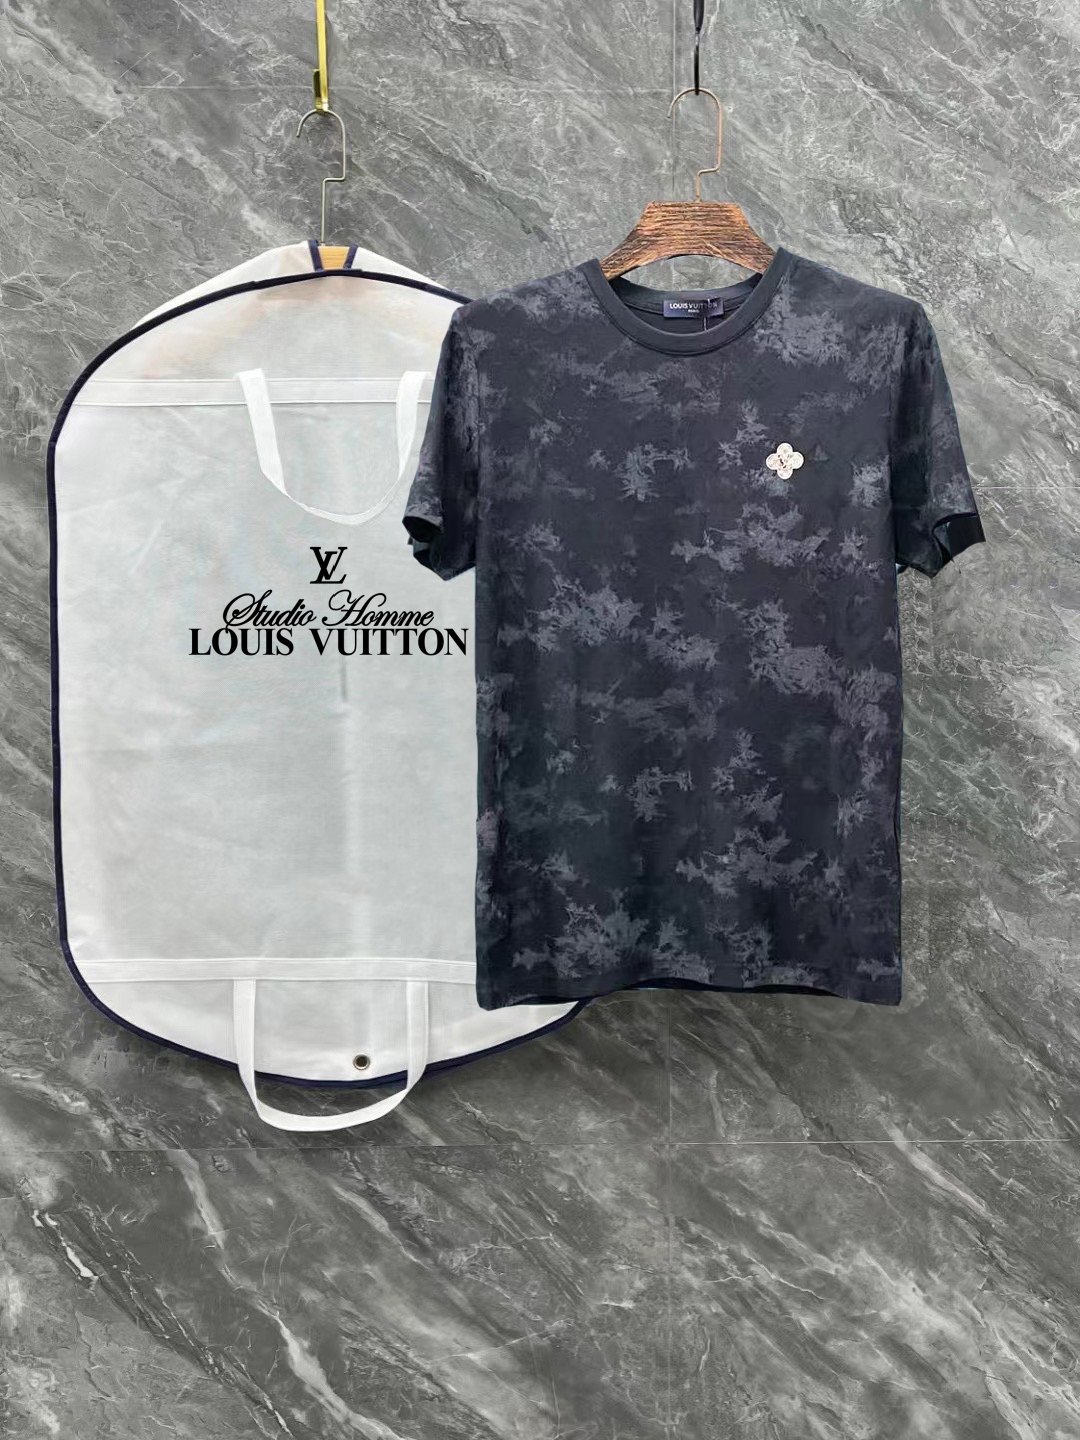 Louis Vuitton Clothing T-Shirt High Quality Designer Replica
 Black White Unisex Cotton Mercerized Spring/Summer Collection Fashion Short Sleeve